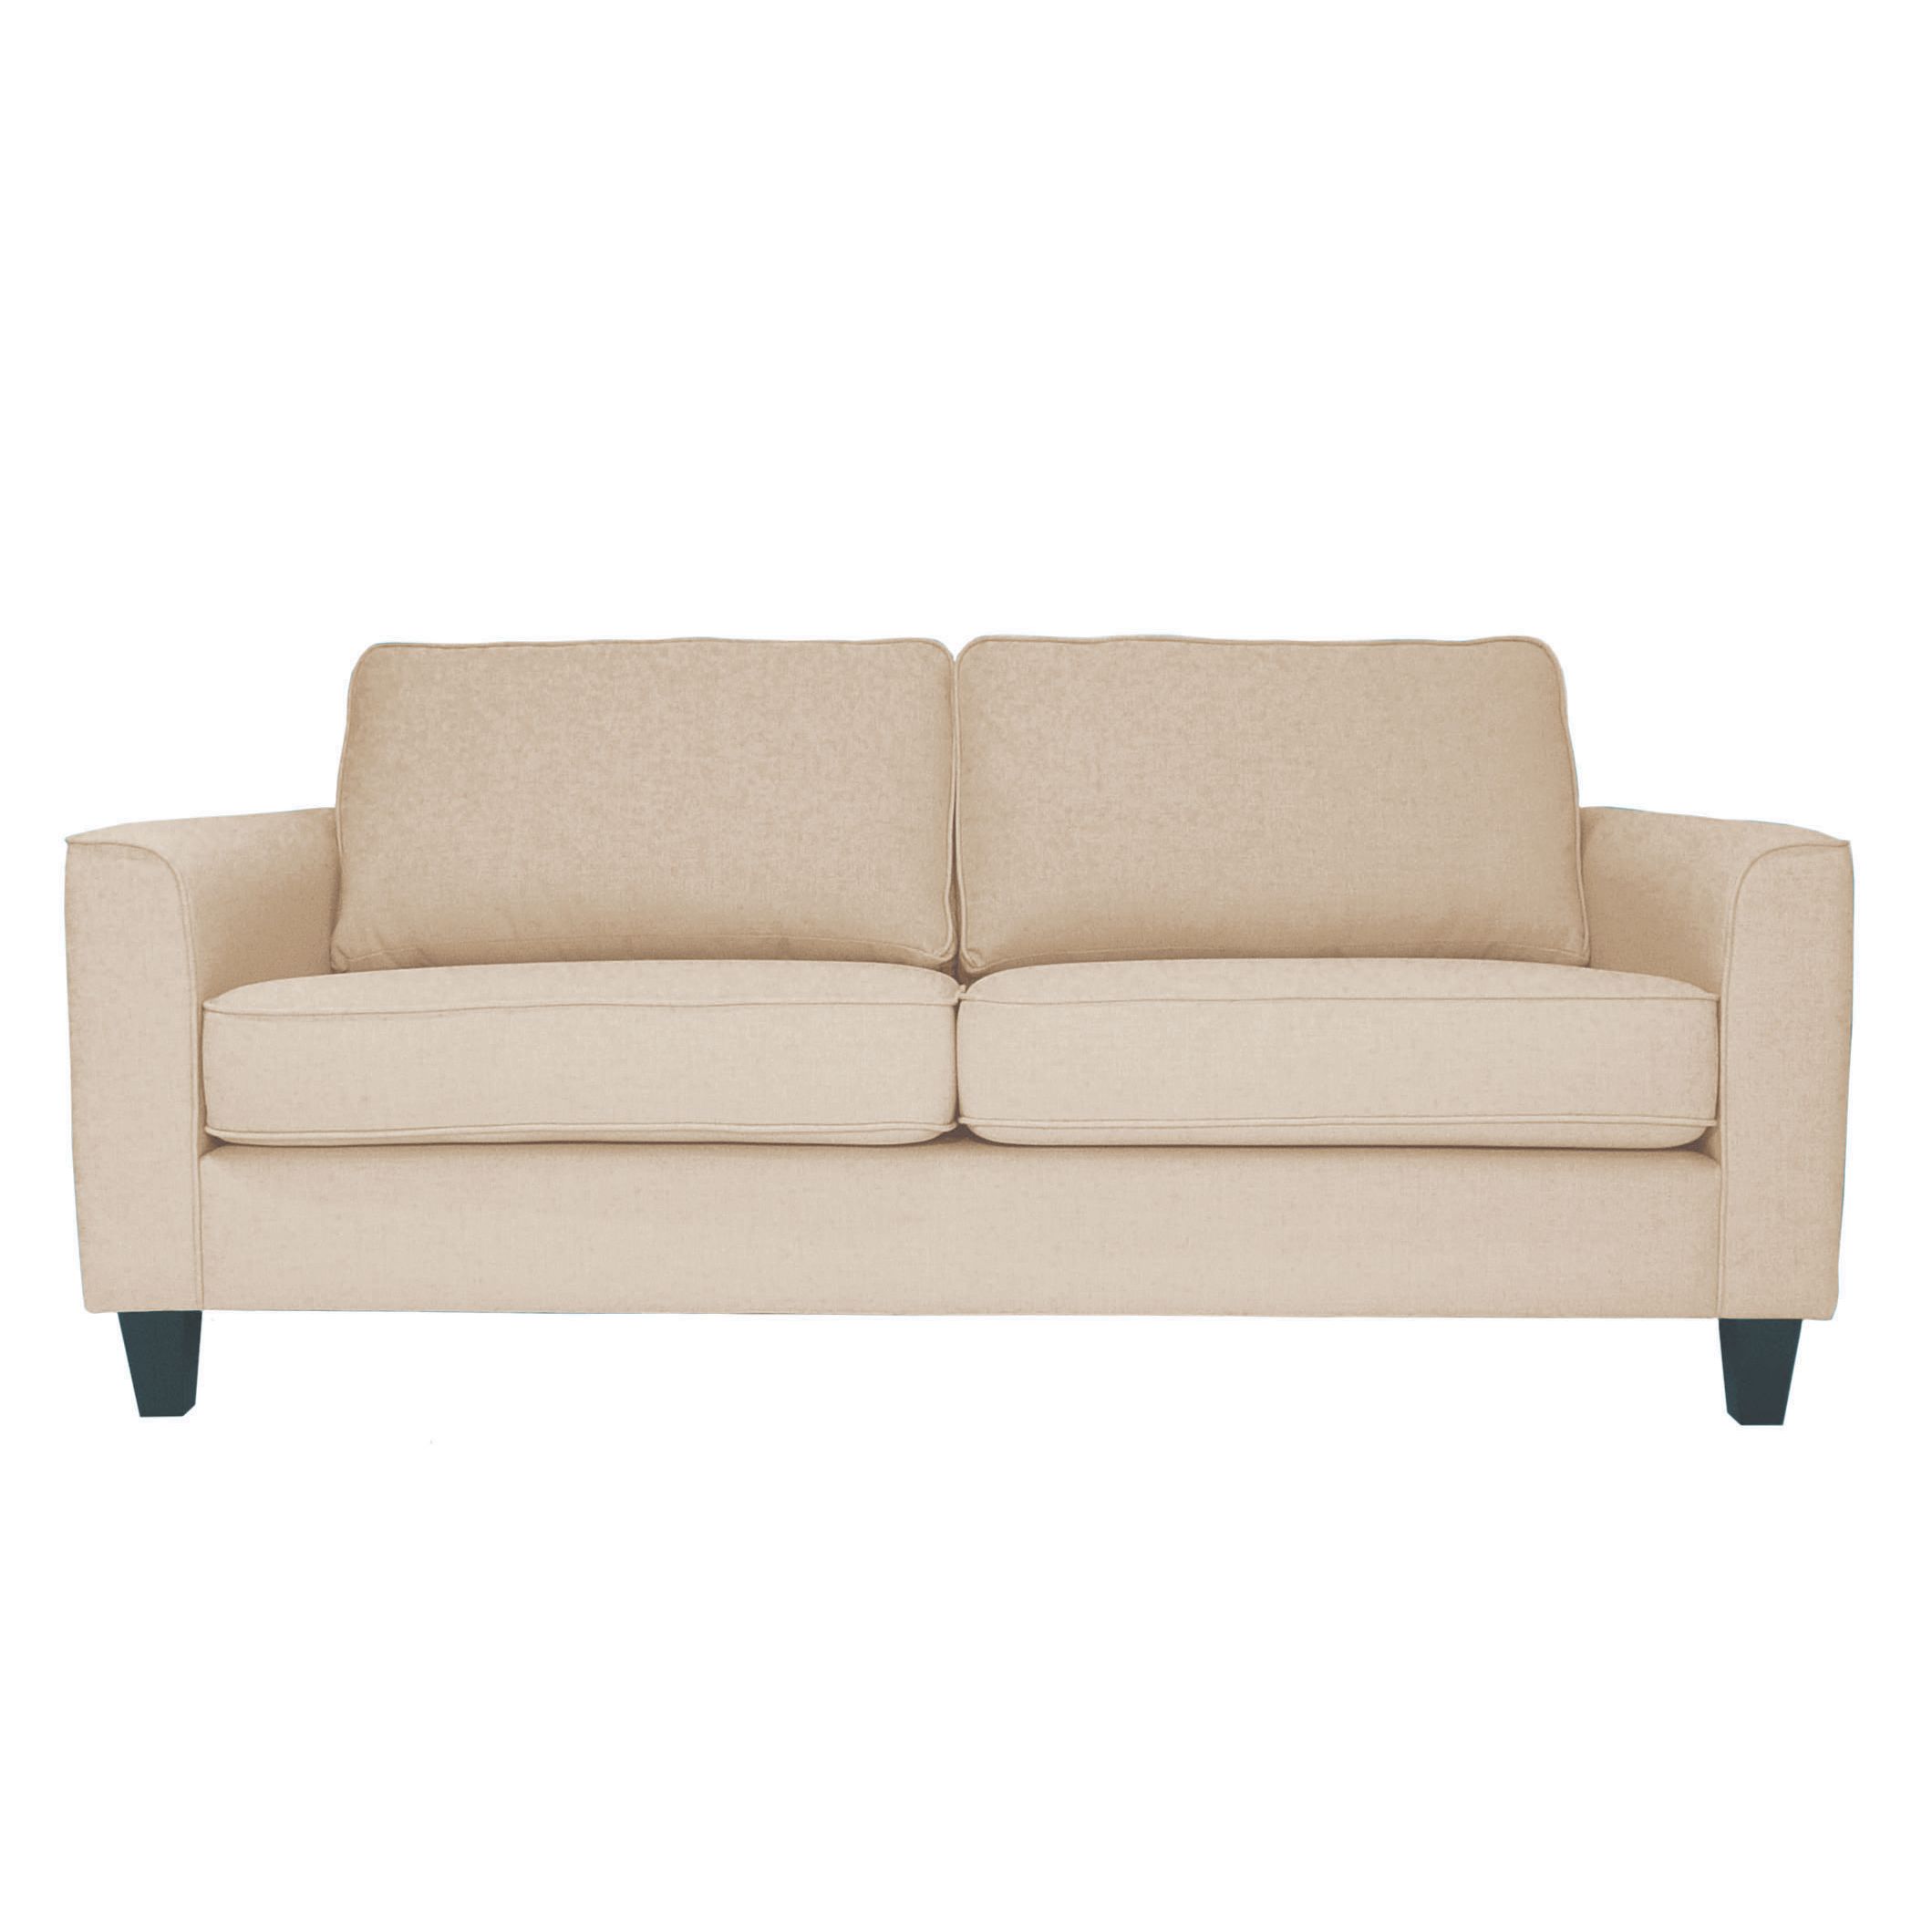 John Lewis Portia Medium Sofa Bed, Camel / Dark Leg, width 183cm